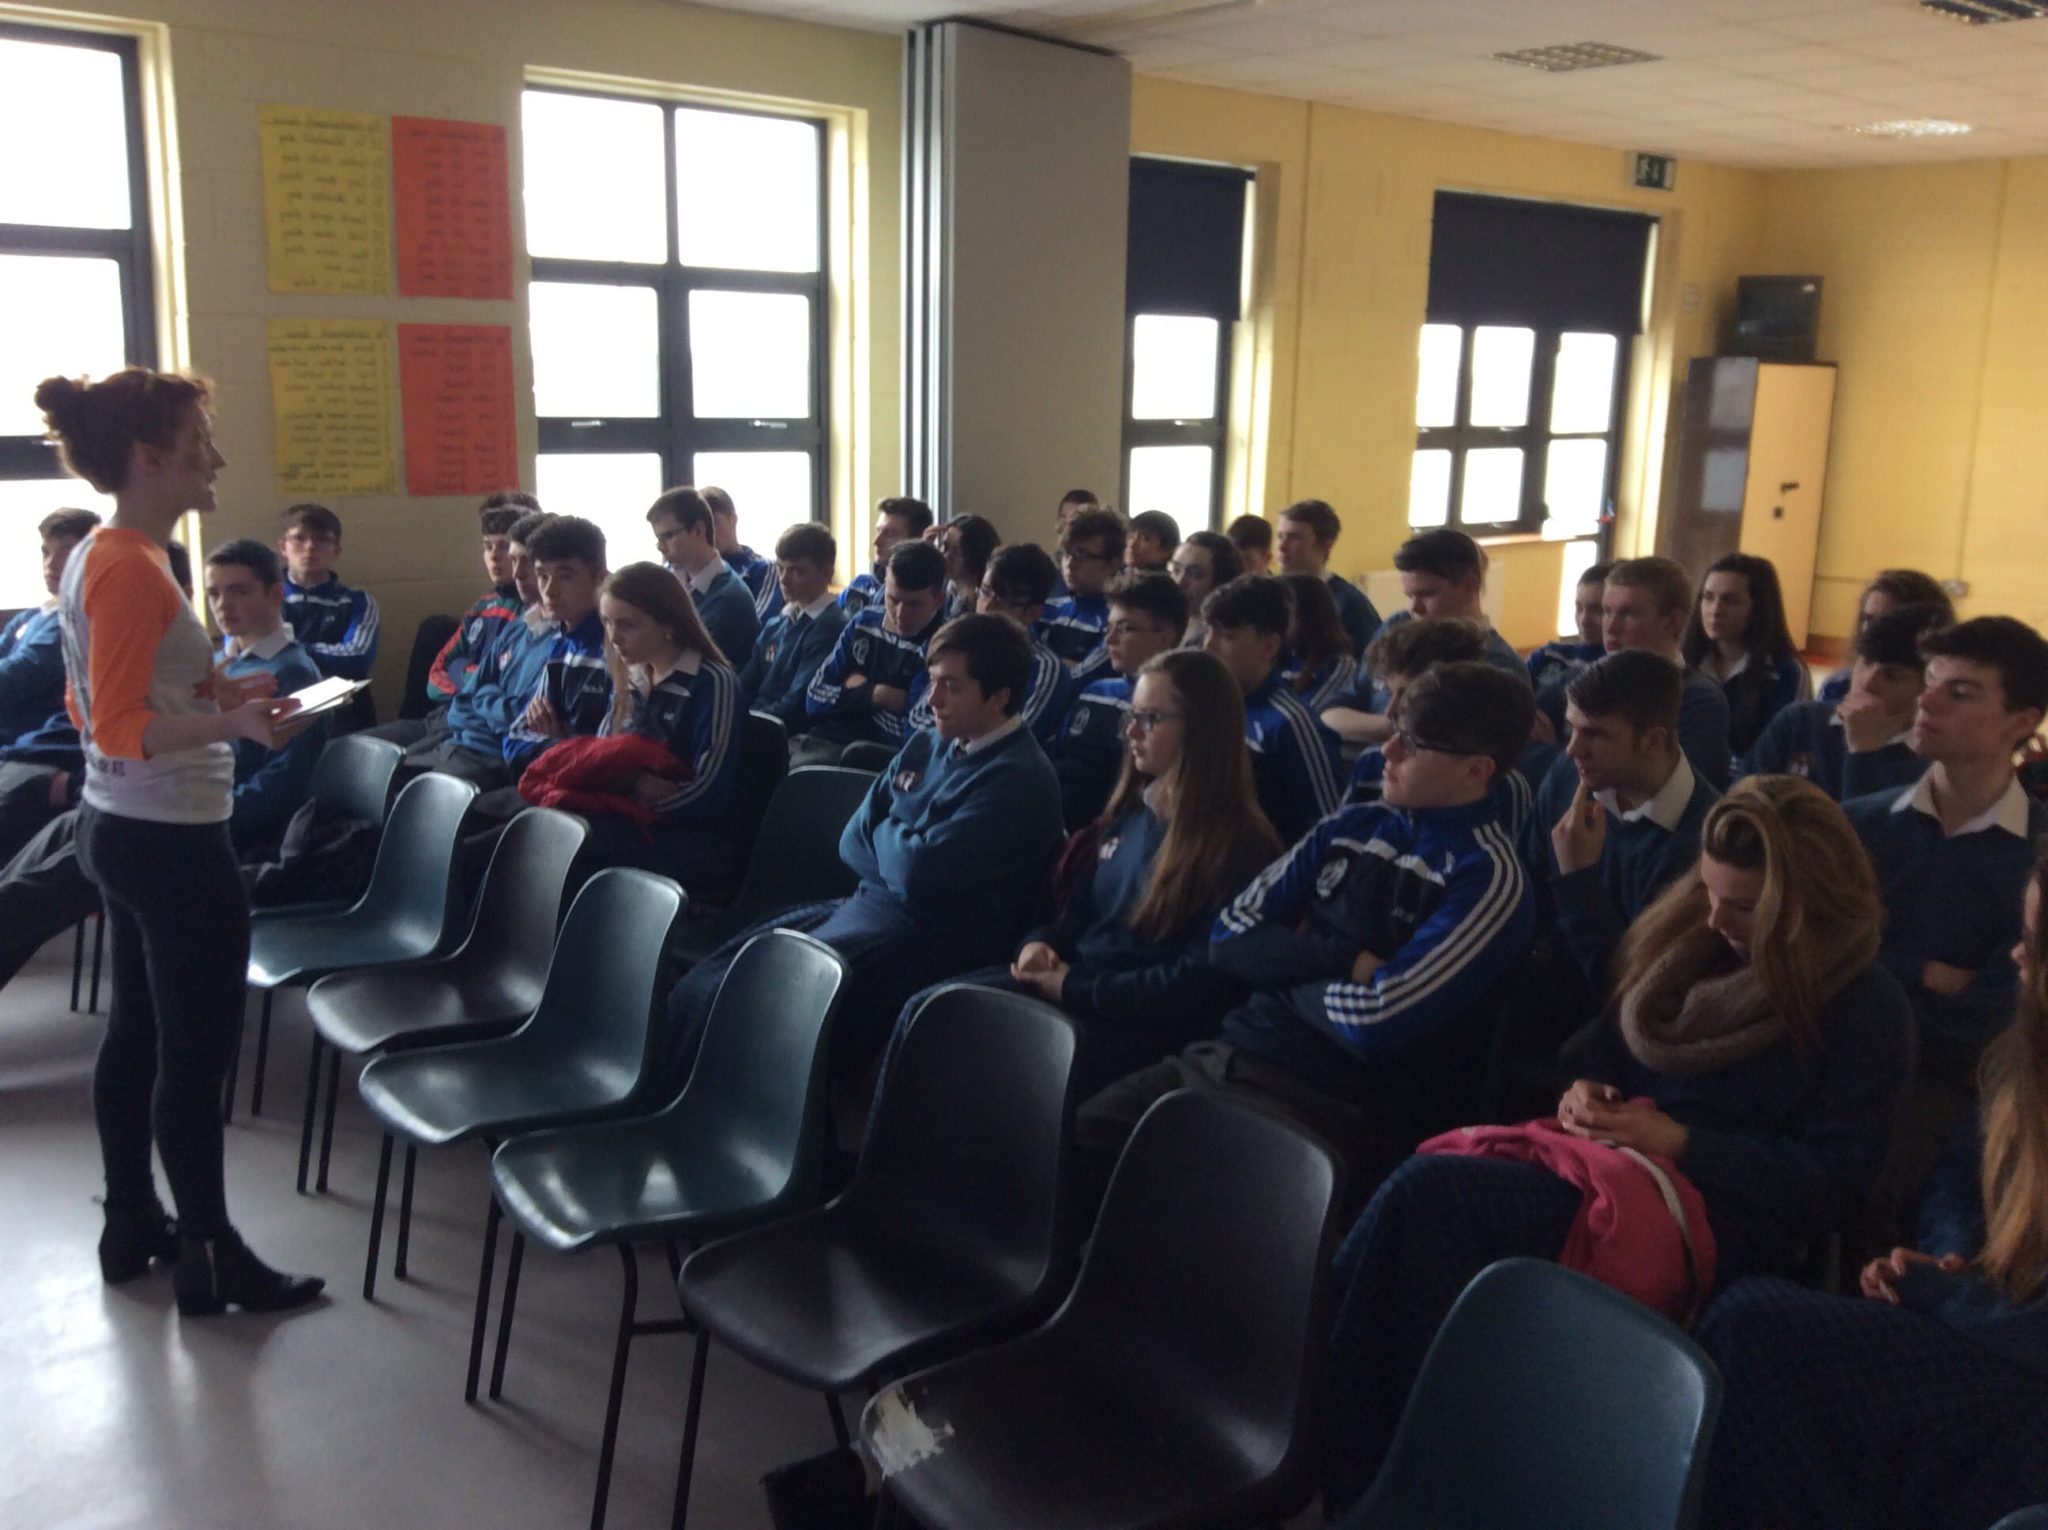 March 2016 Seachtain na Gaeilge in desmond college